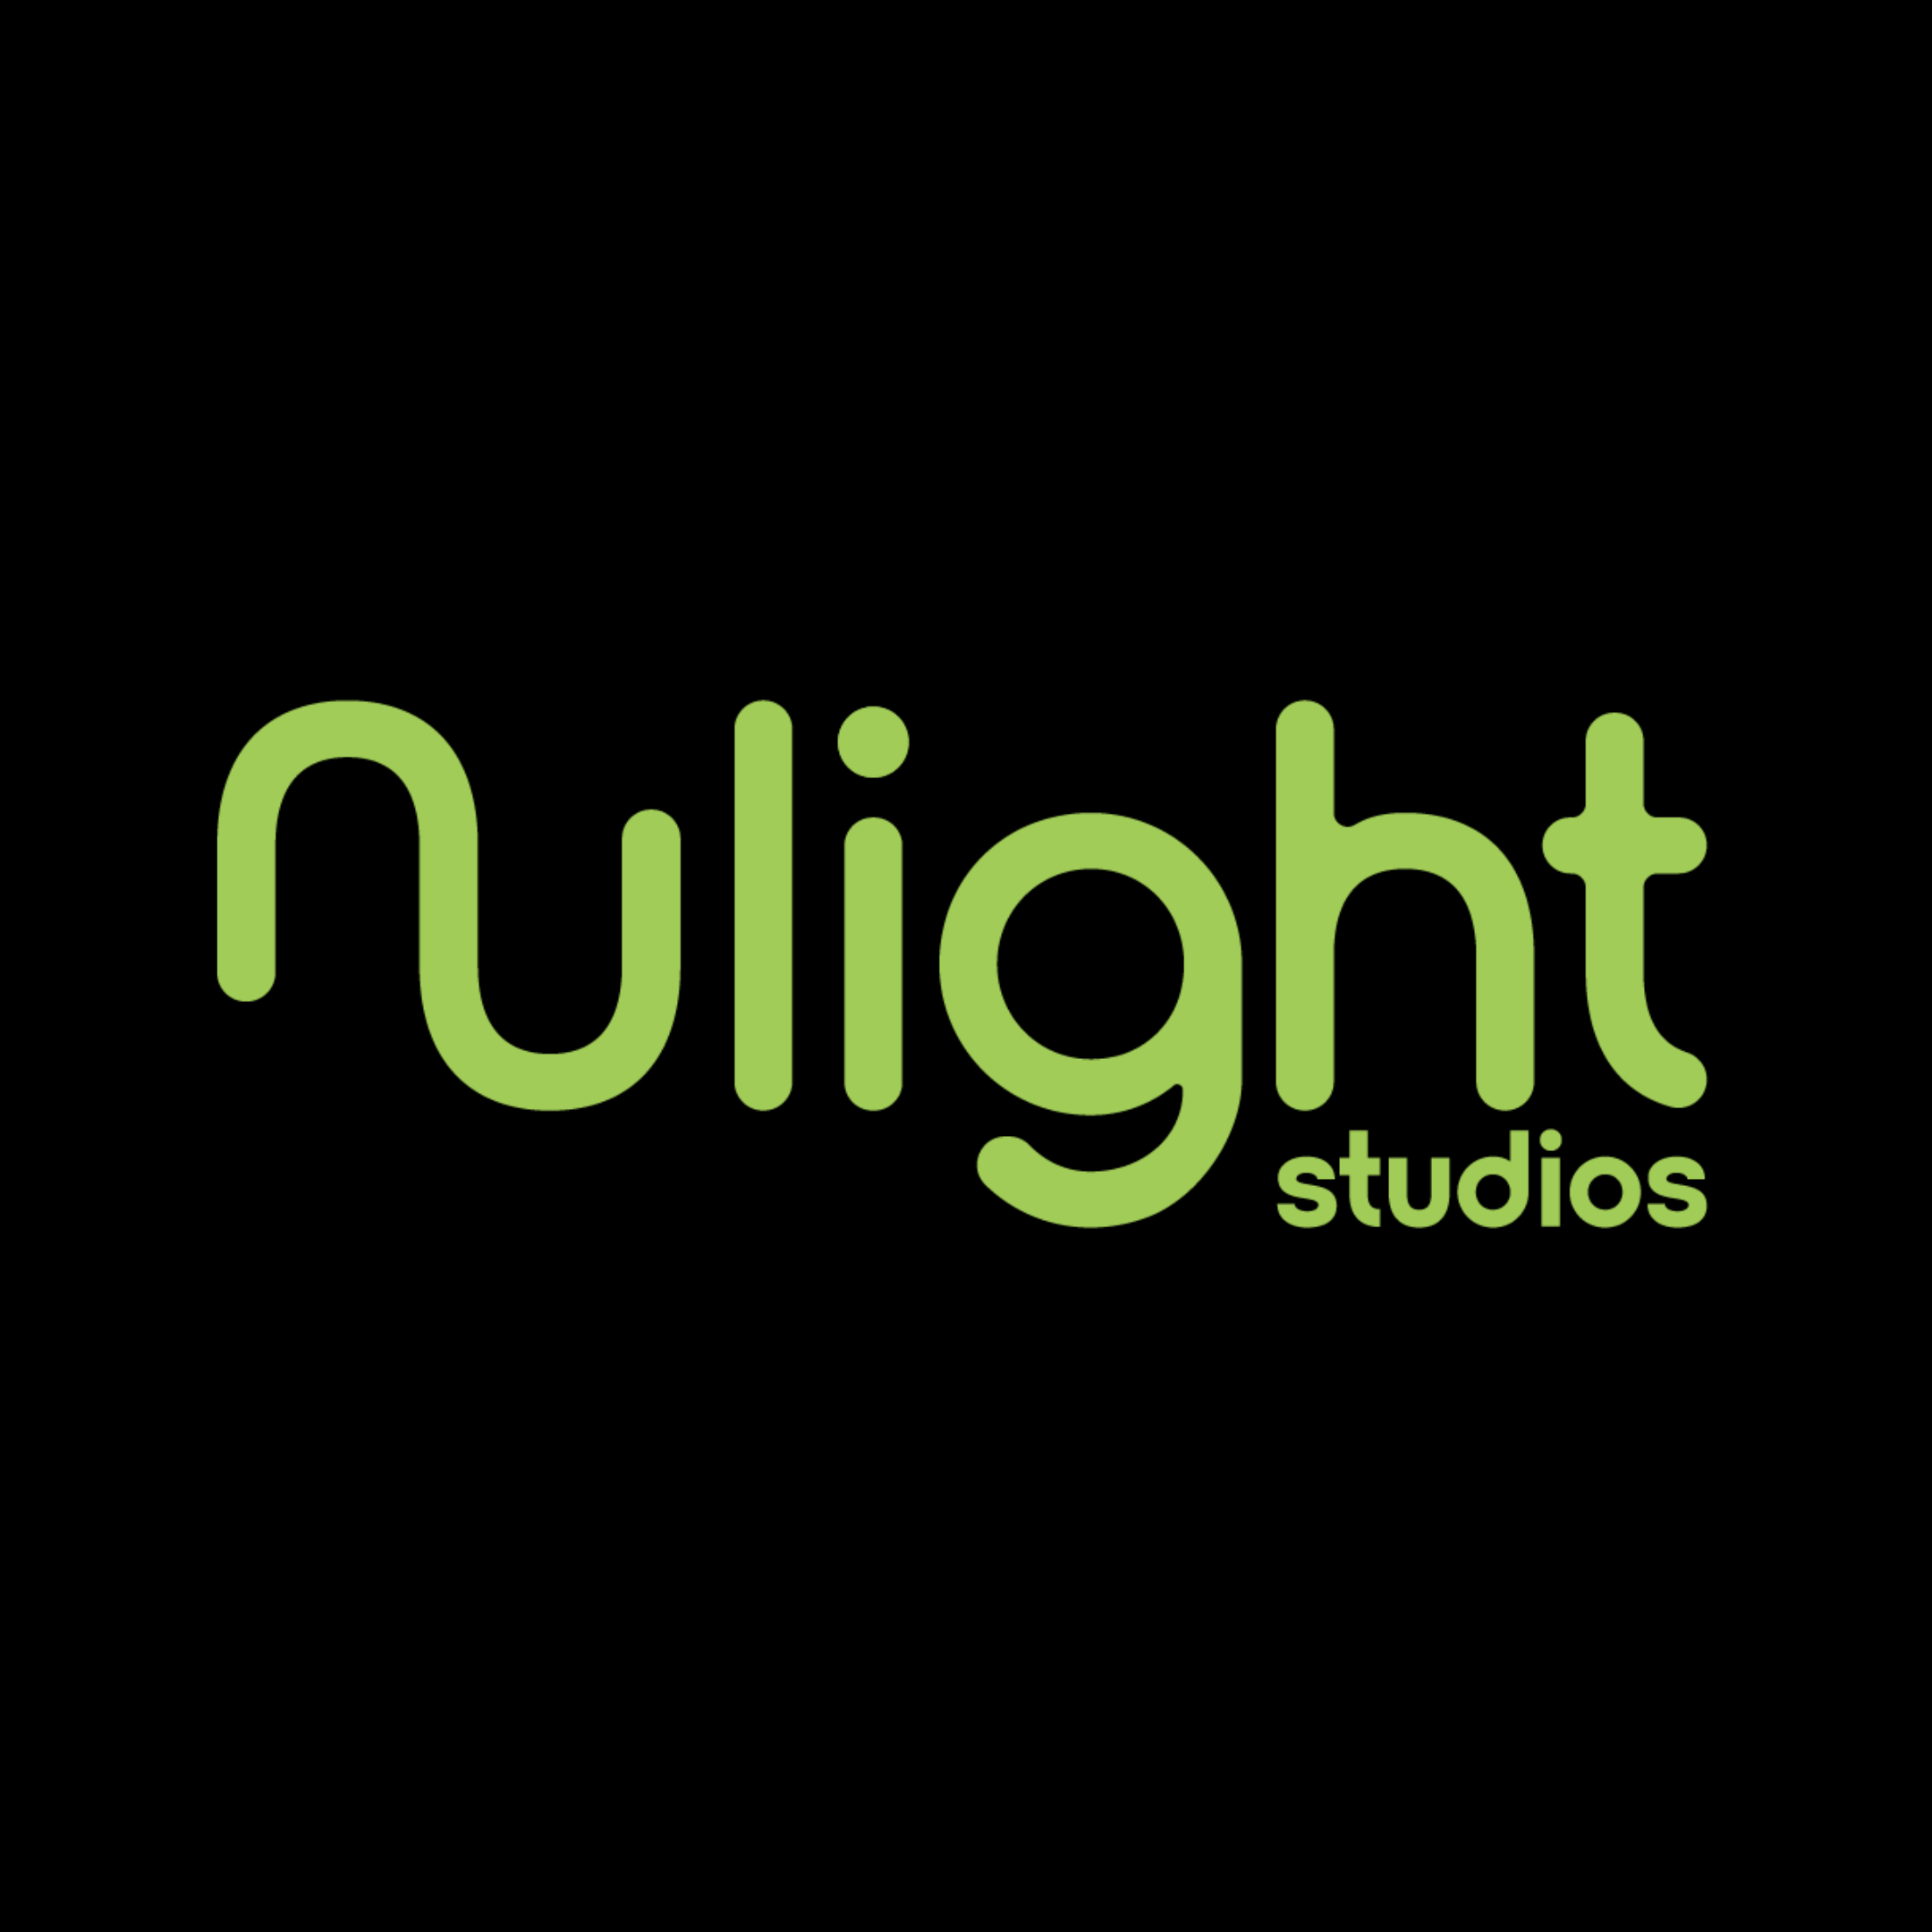 An image of Nulight studios logo.